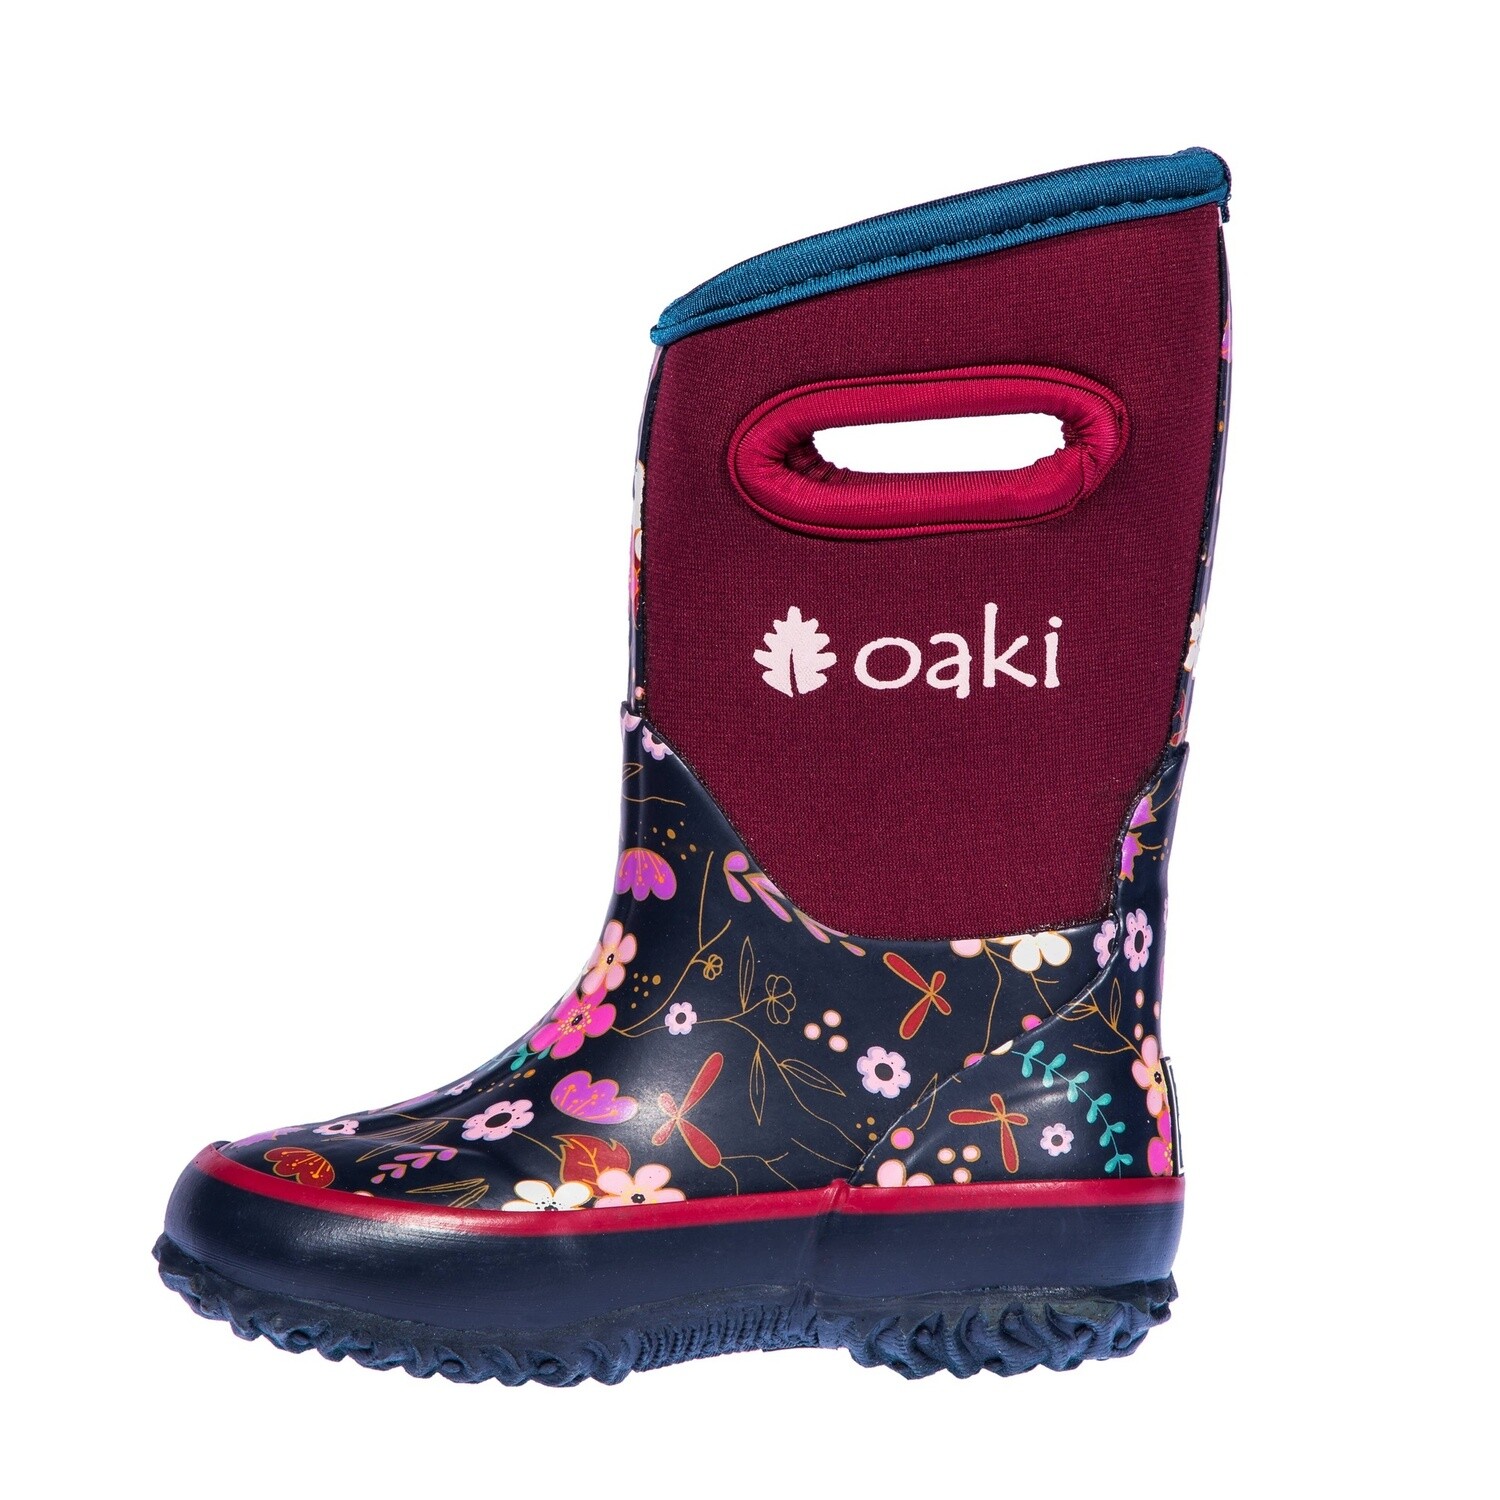 Oakiwear Midnight Floral Neoprene Rain/Snow Boots